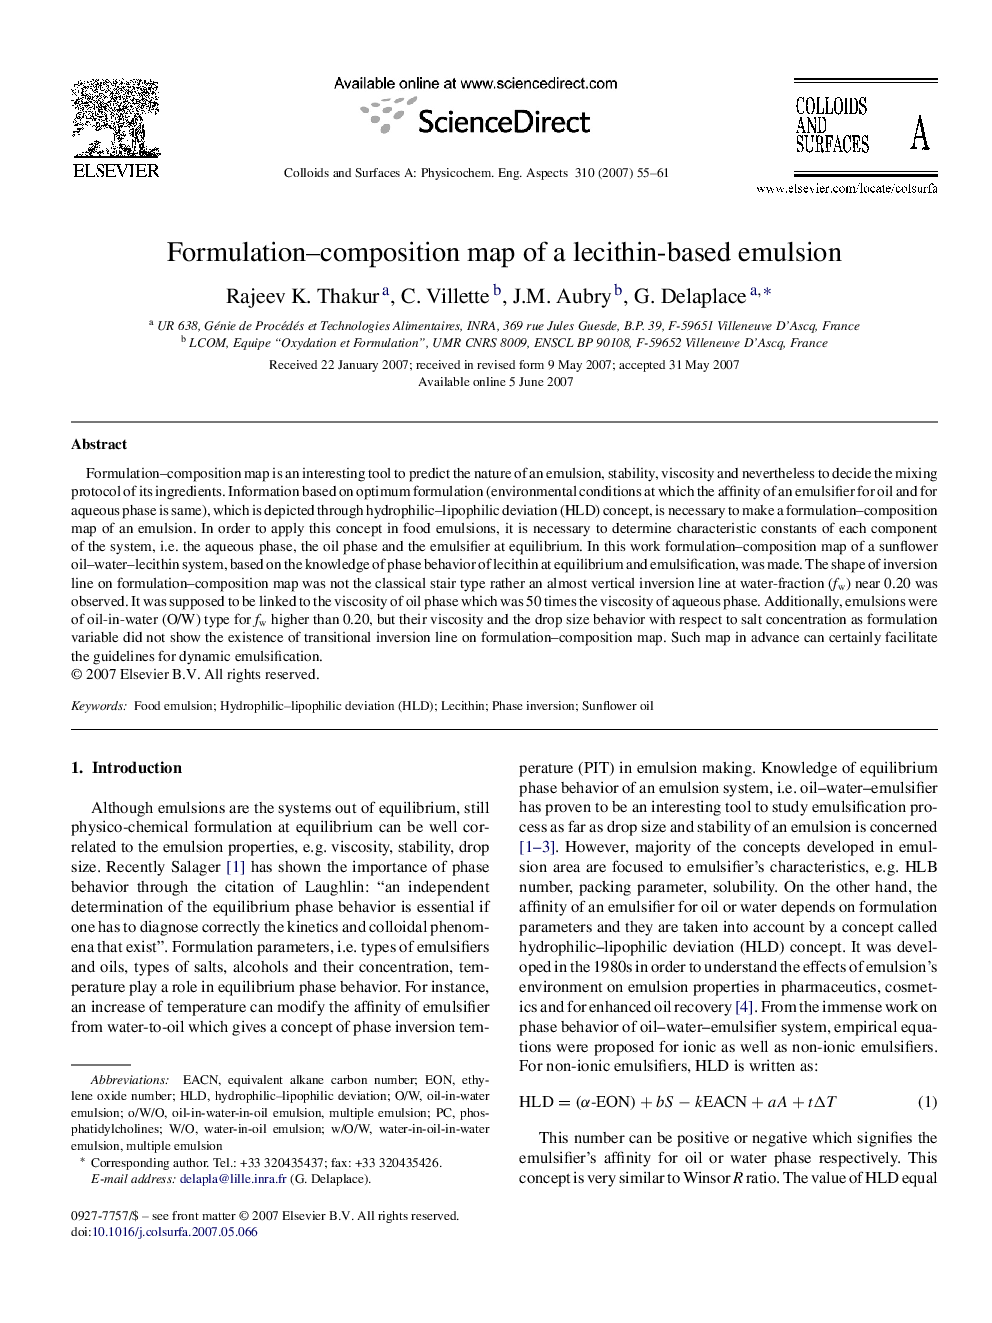 Formulation-composition map of a lecithin-based emulsion